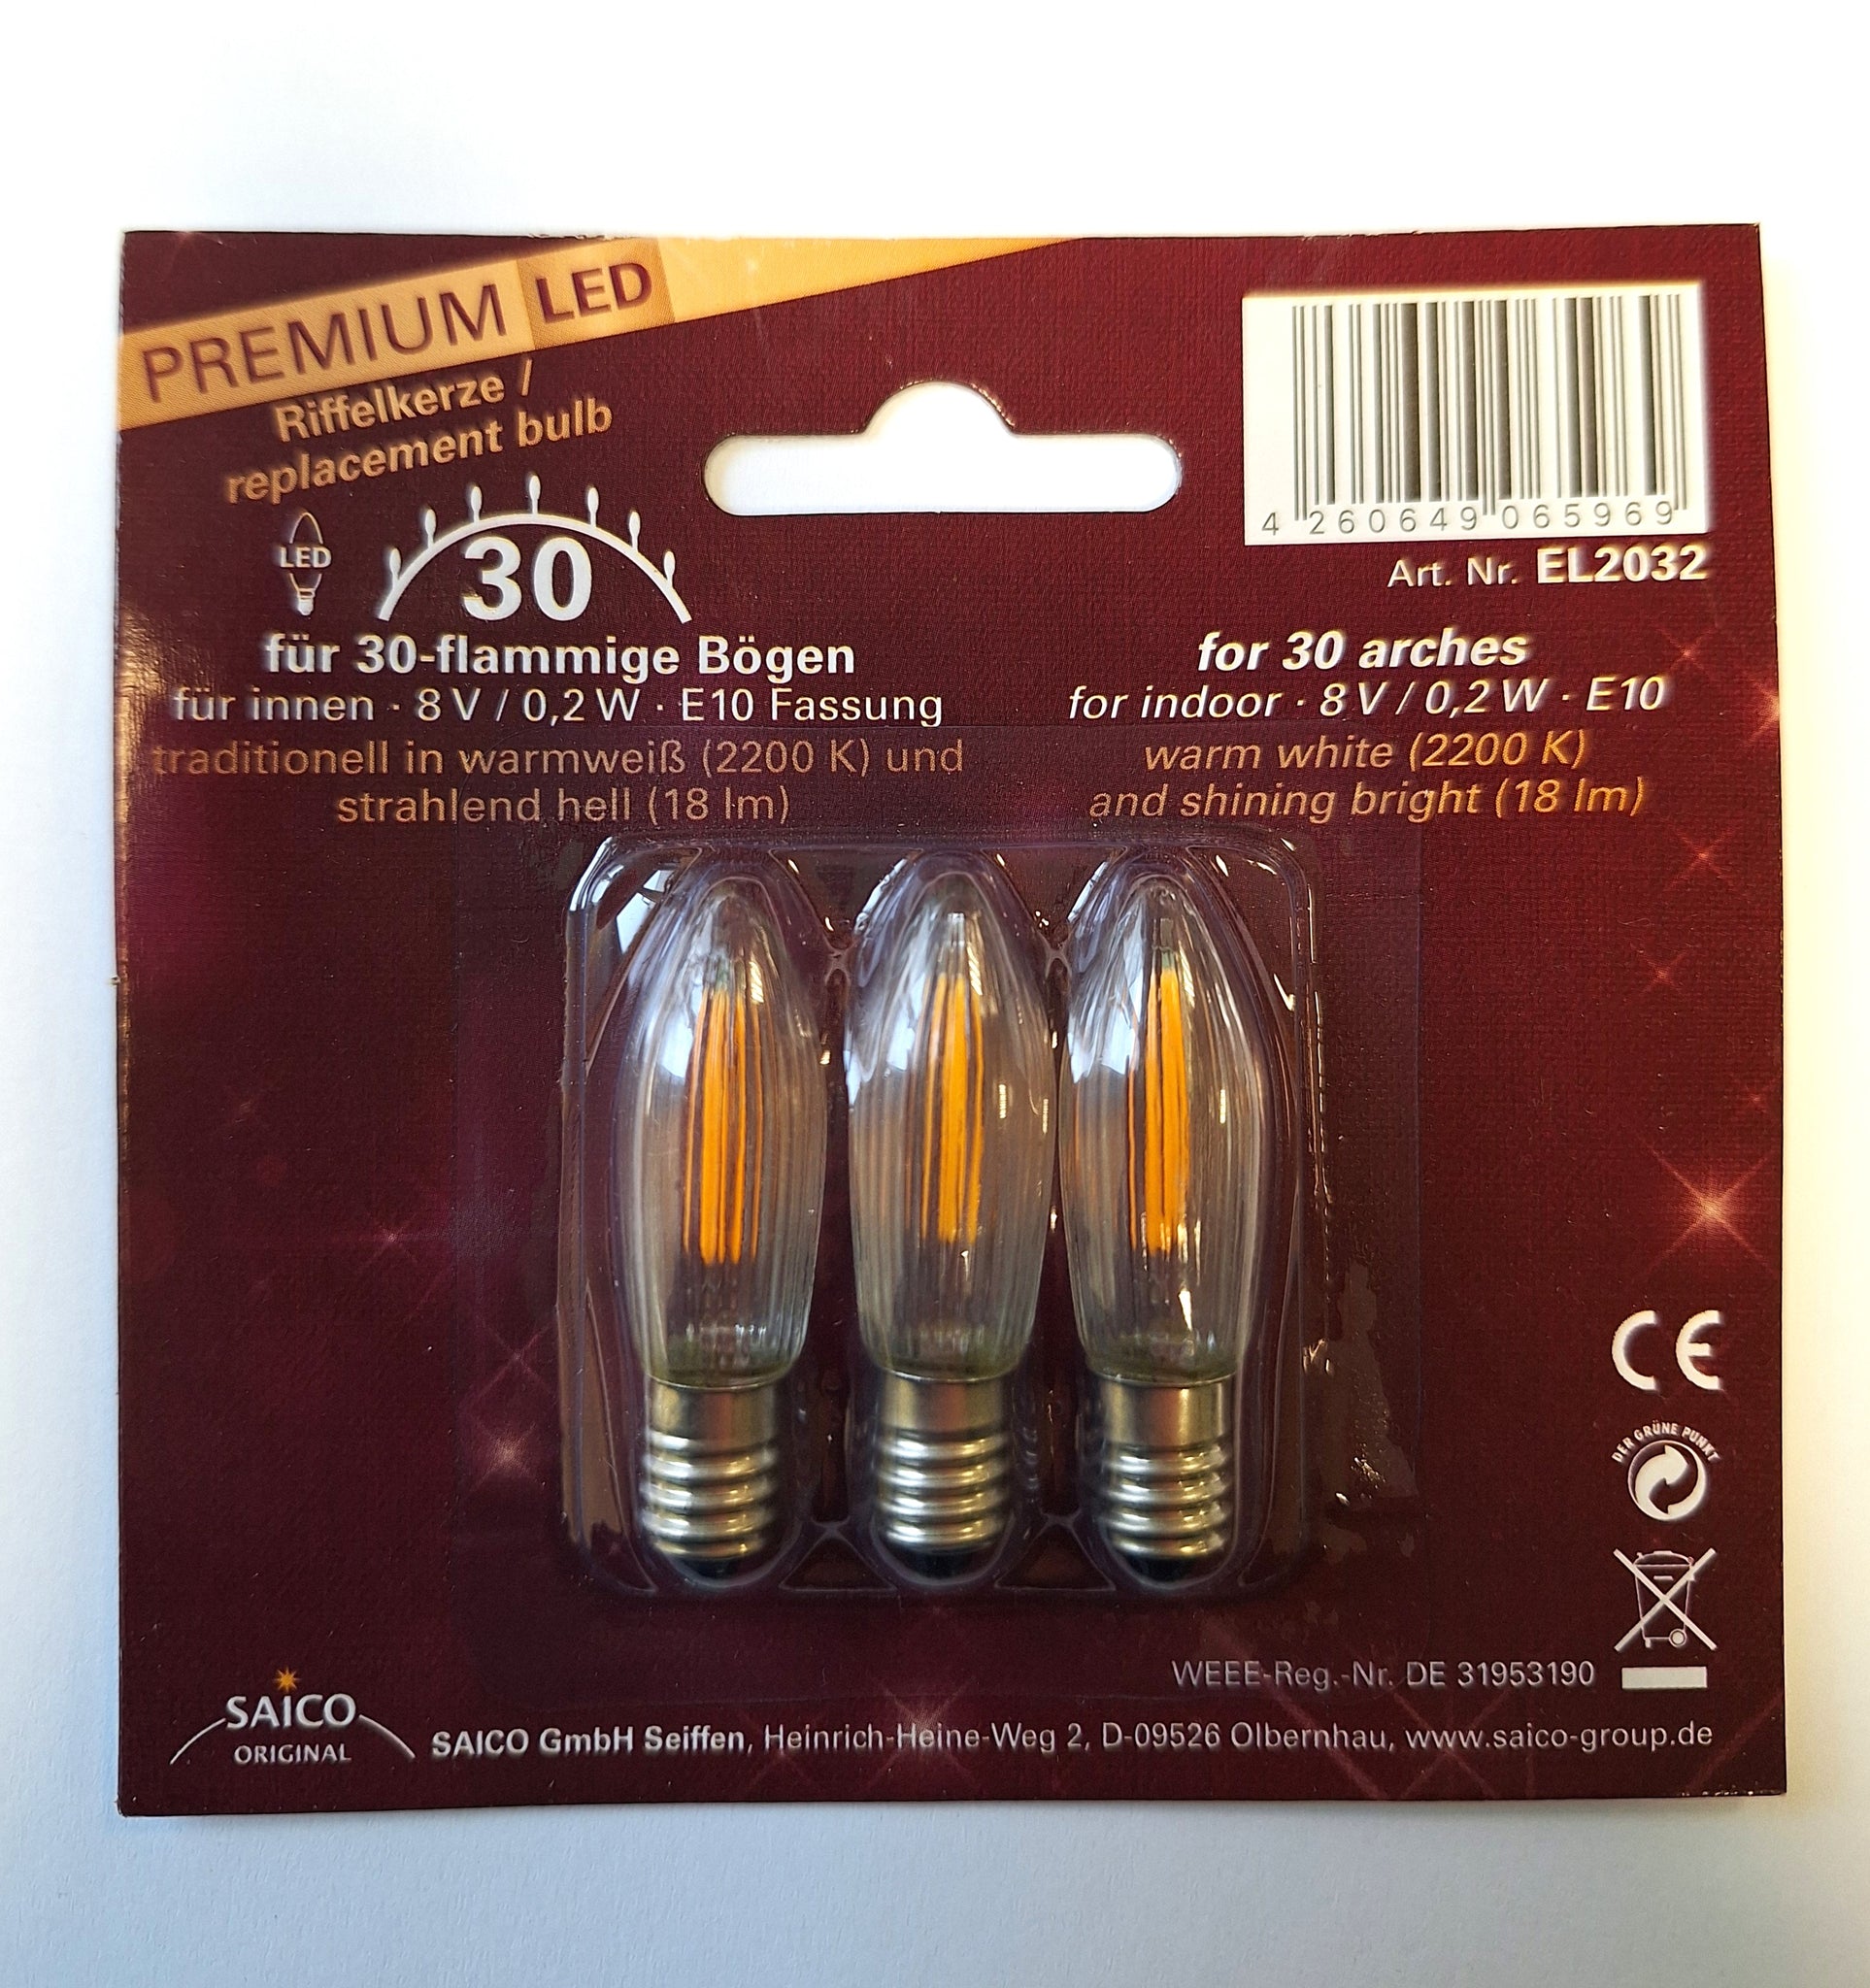 Premium LED replacement lamp 3x 8V - 0.2W - E10